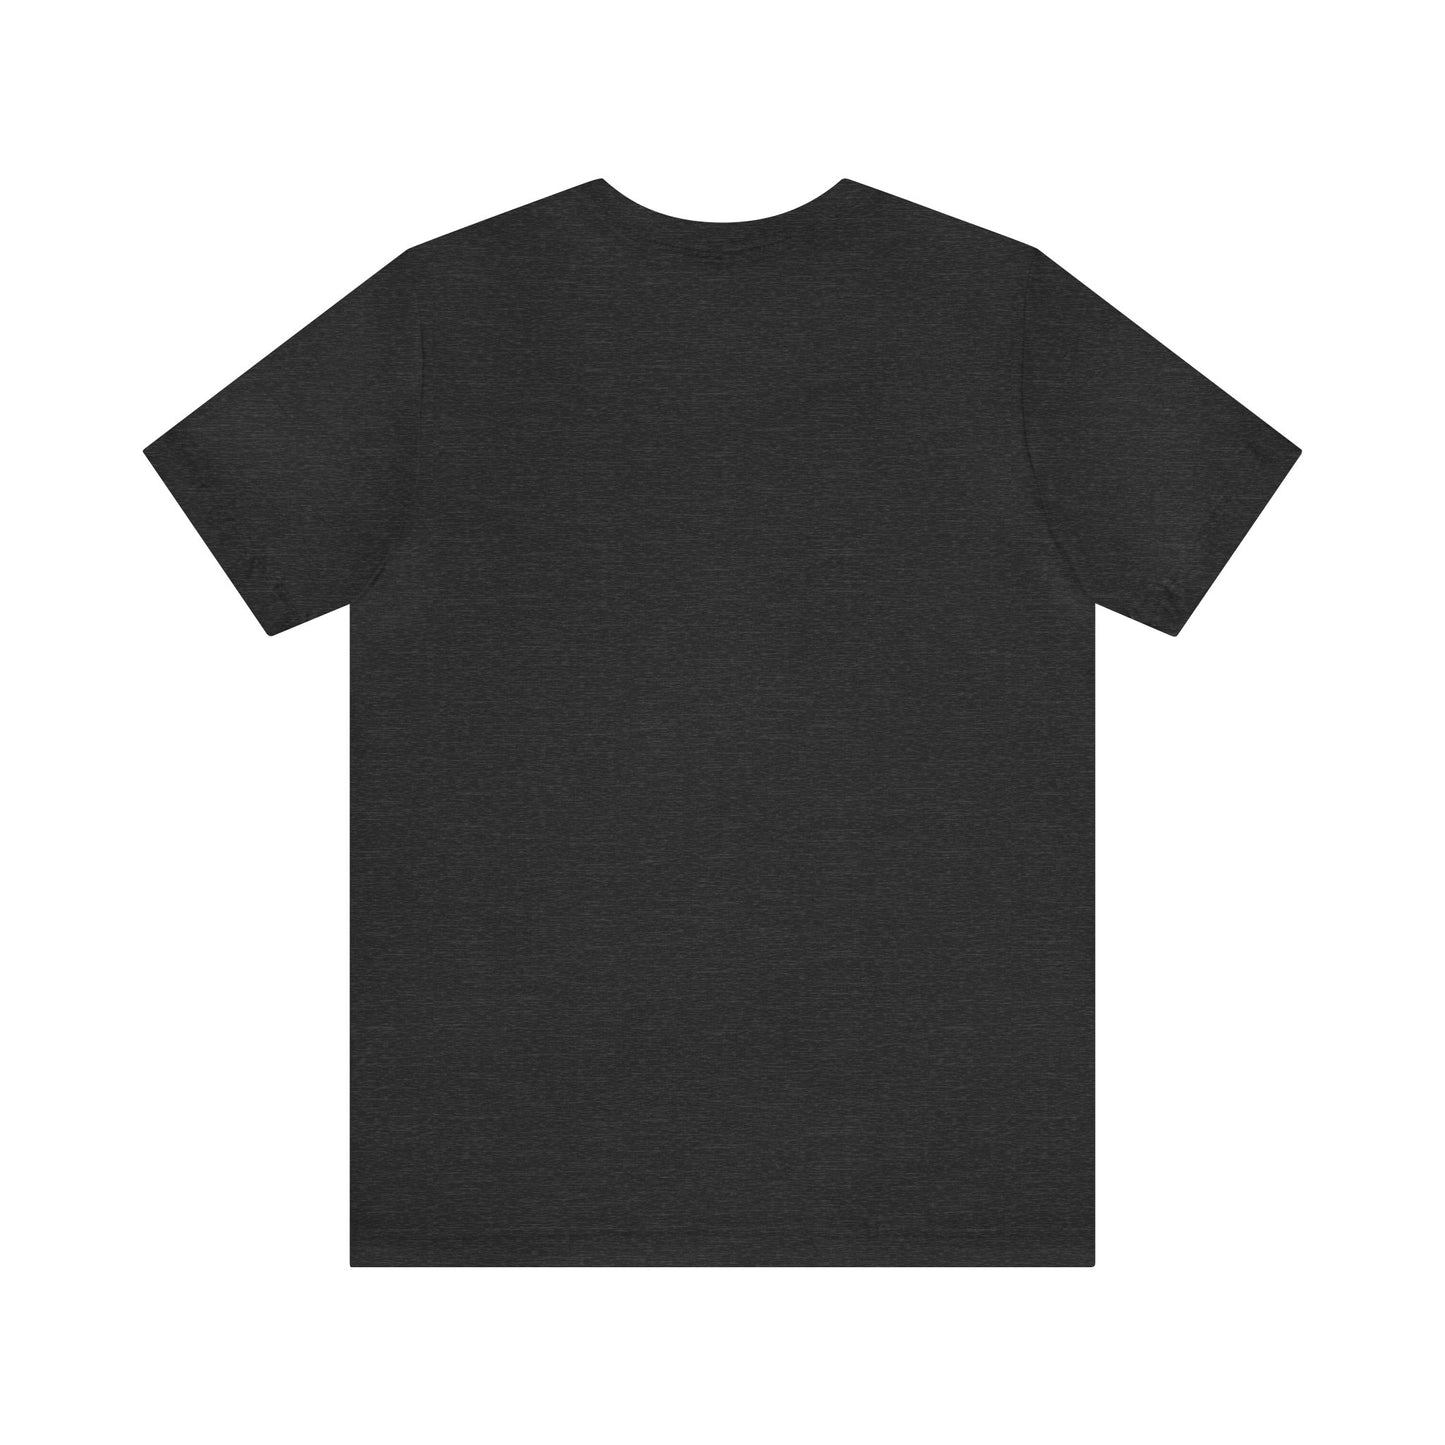 Dachshund Shirt - Retro Dachshund Shirt - Dachshund Gift